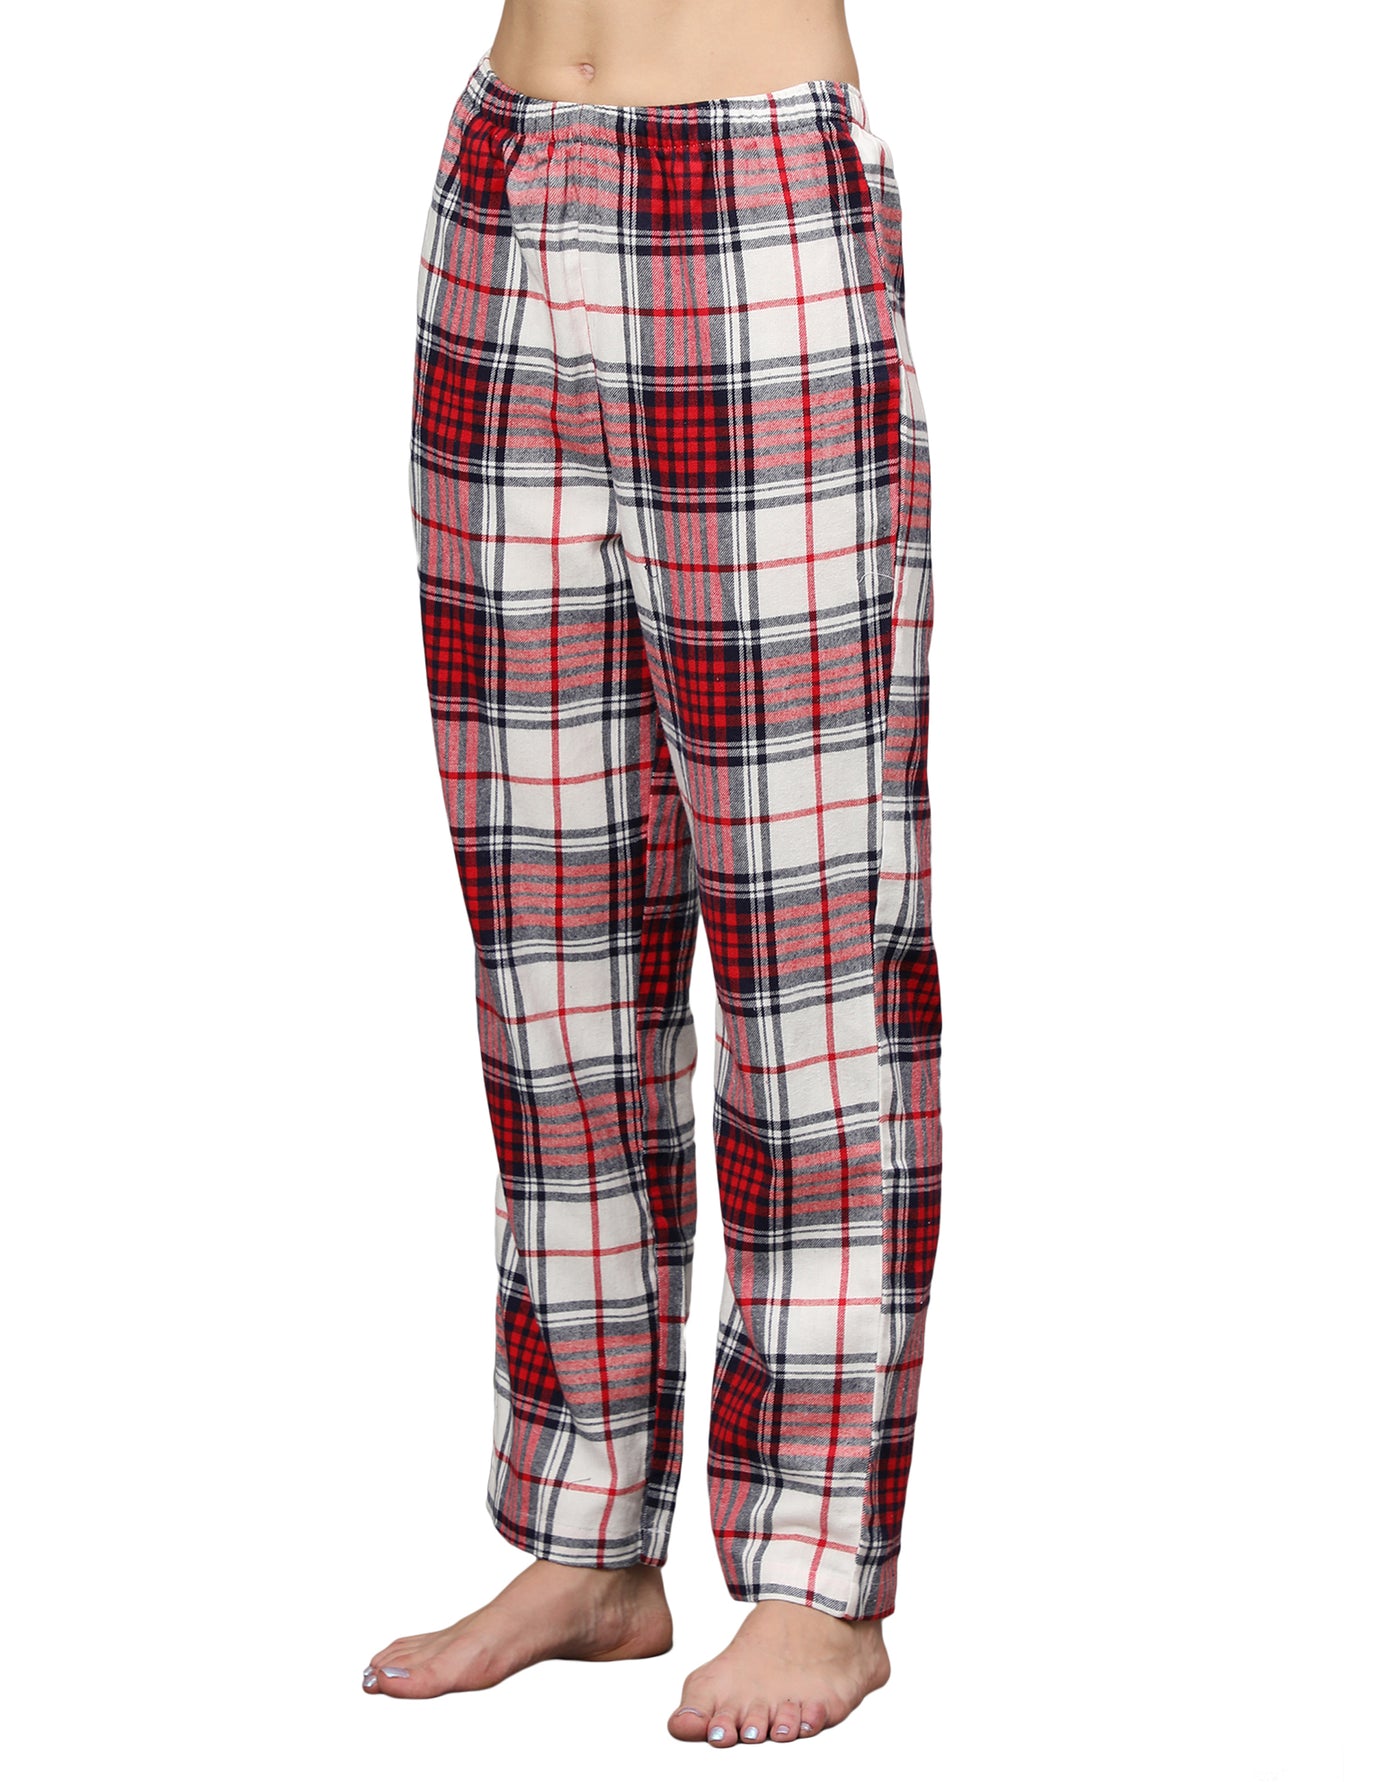 Pyjama Set for Women-Red & Navy Checked